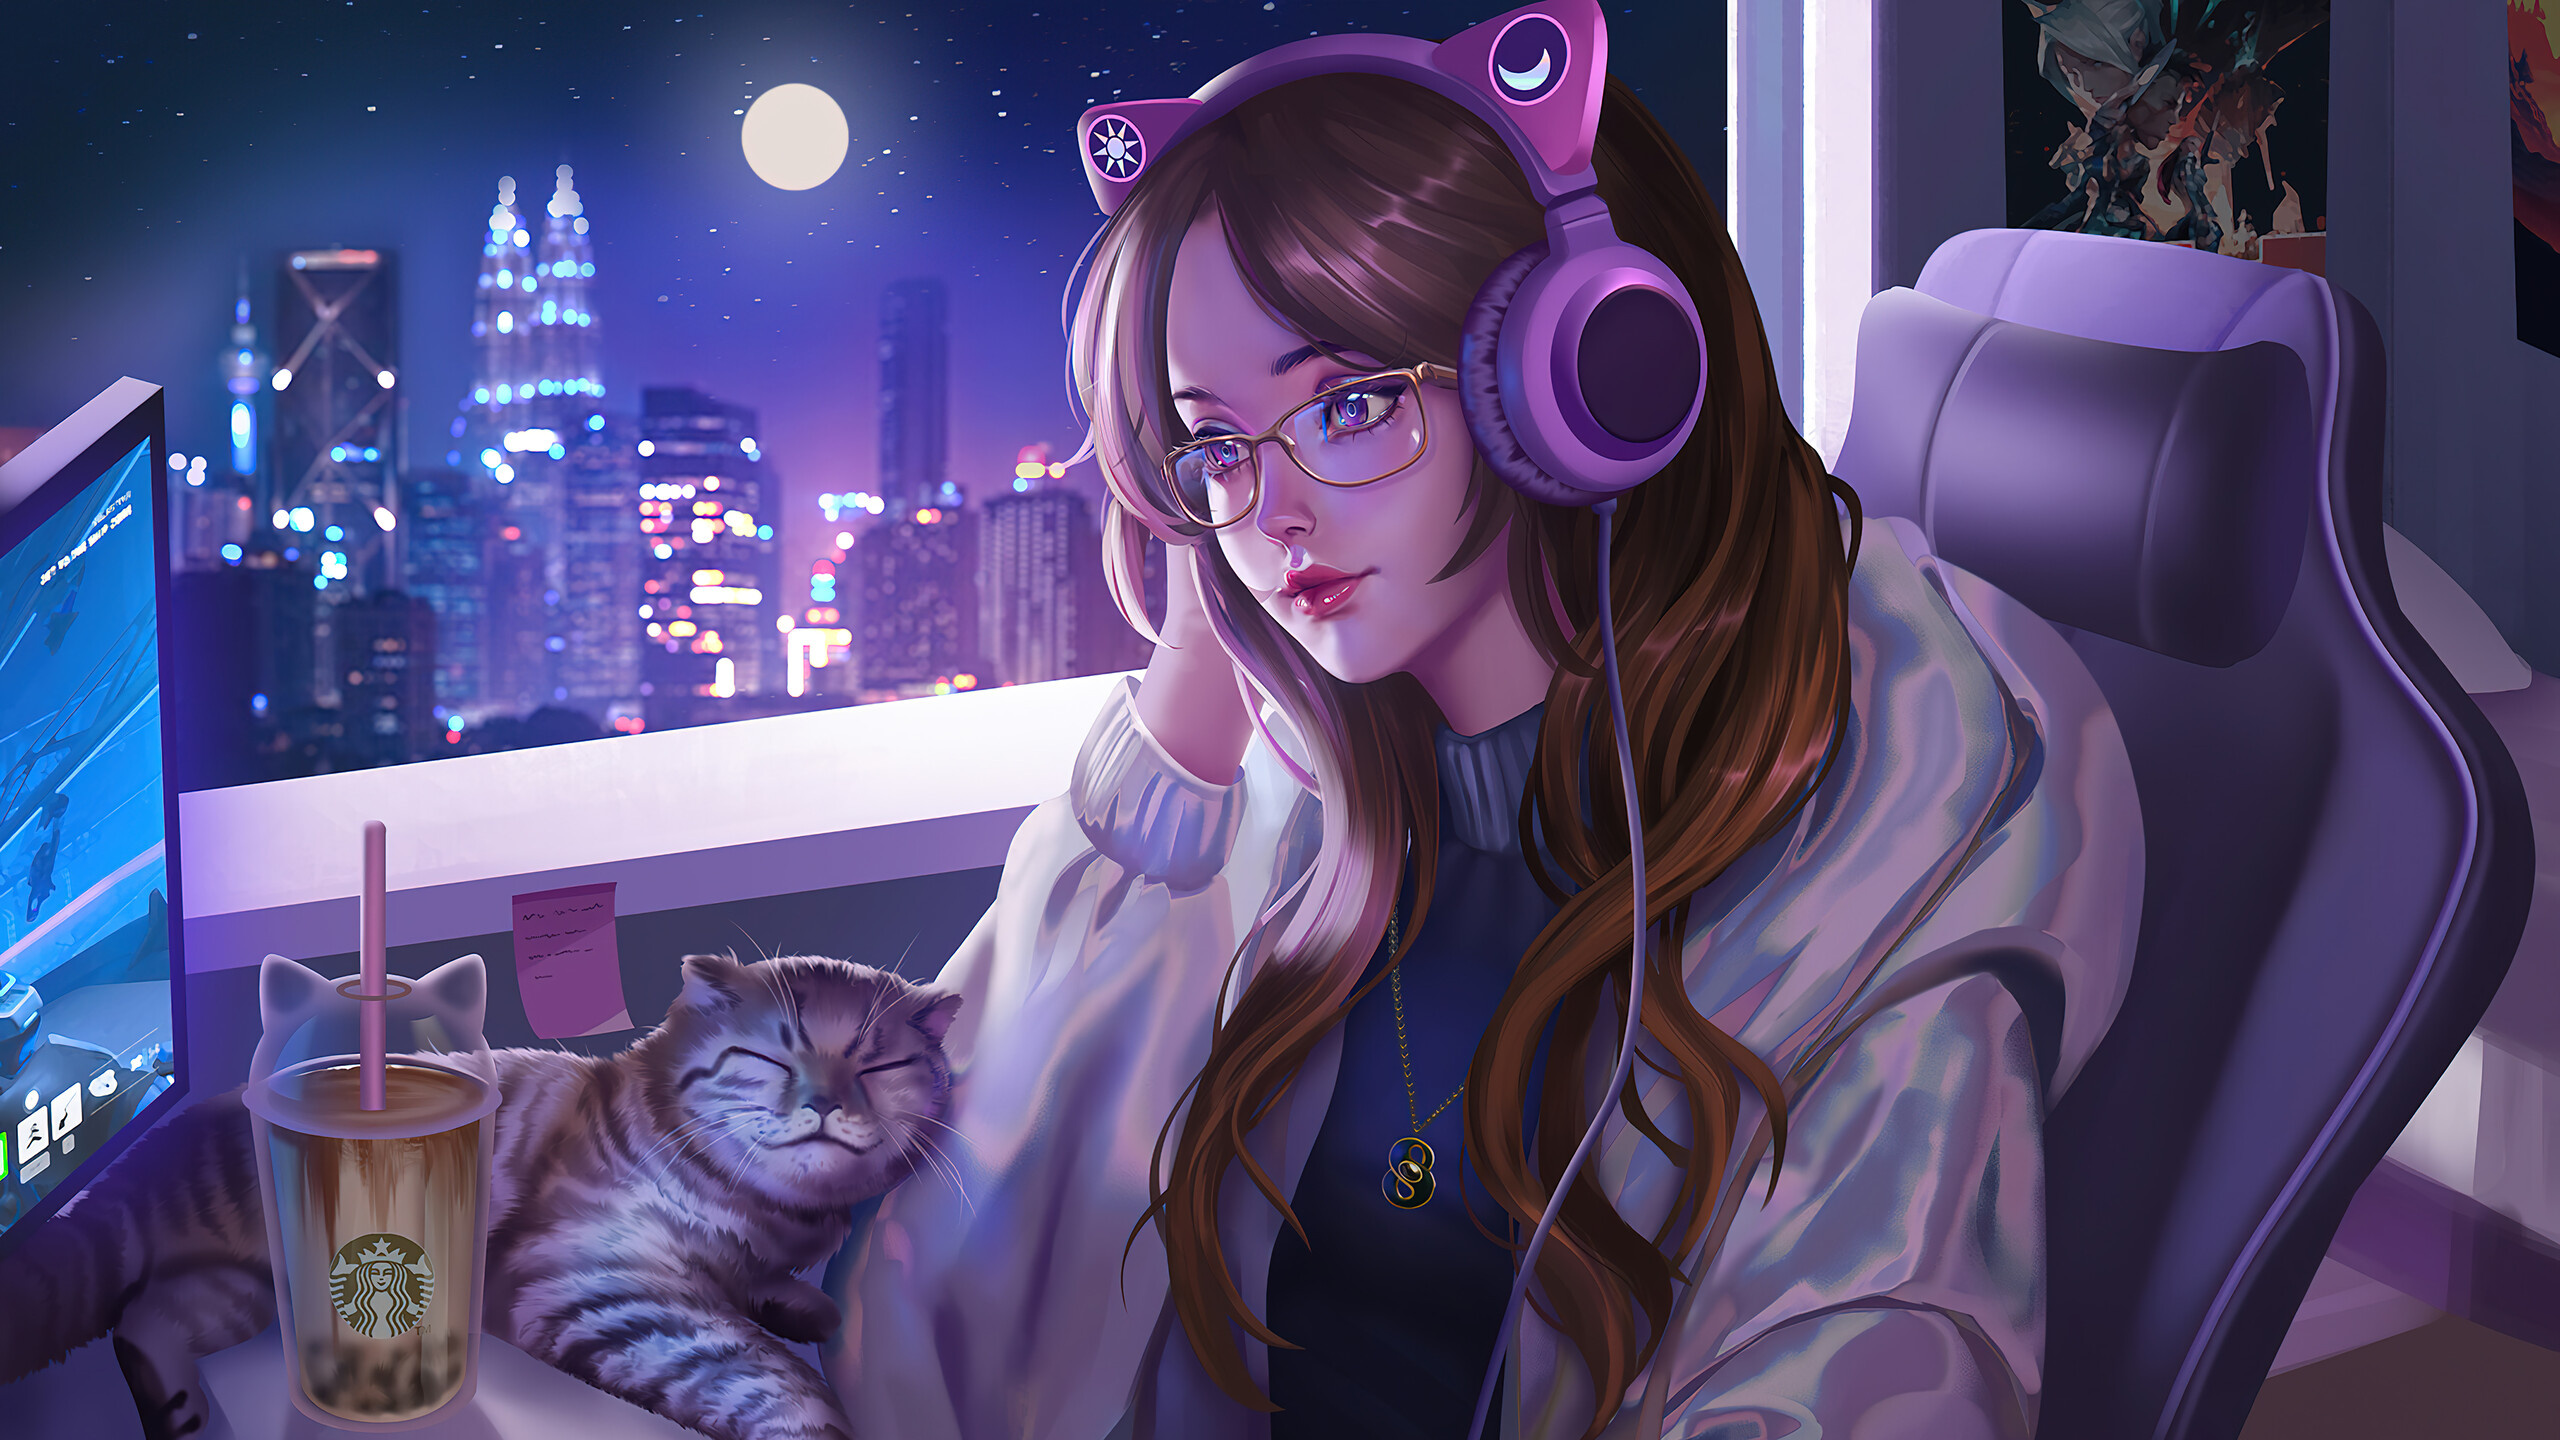 Gamer Girl, Anime girl wallpapers, Cat companions, Laid-back vibes, 2560x1440 HD Desktop